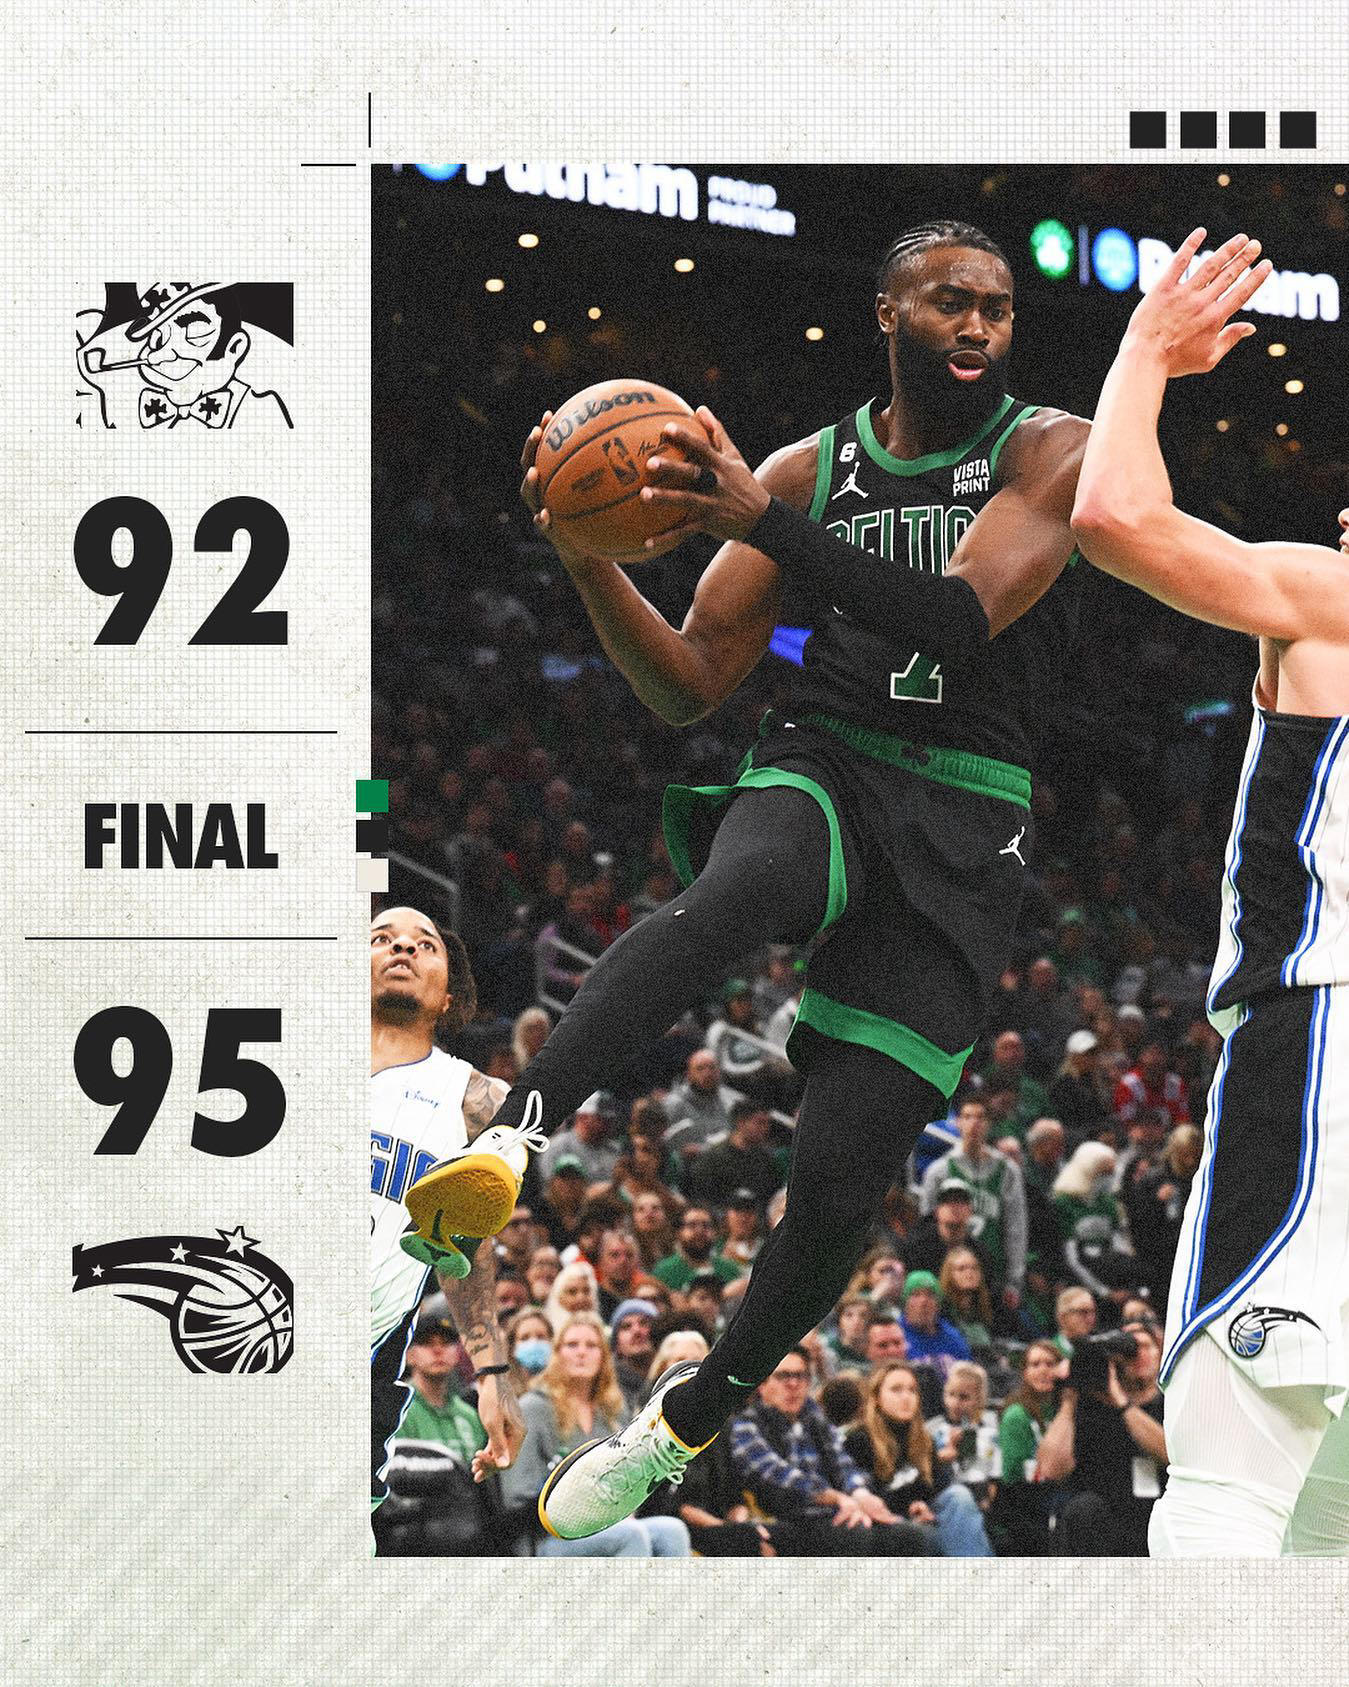 Boston Celtics - Final score